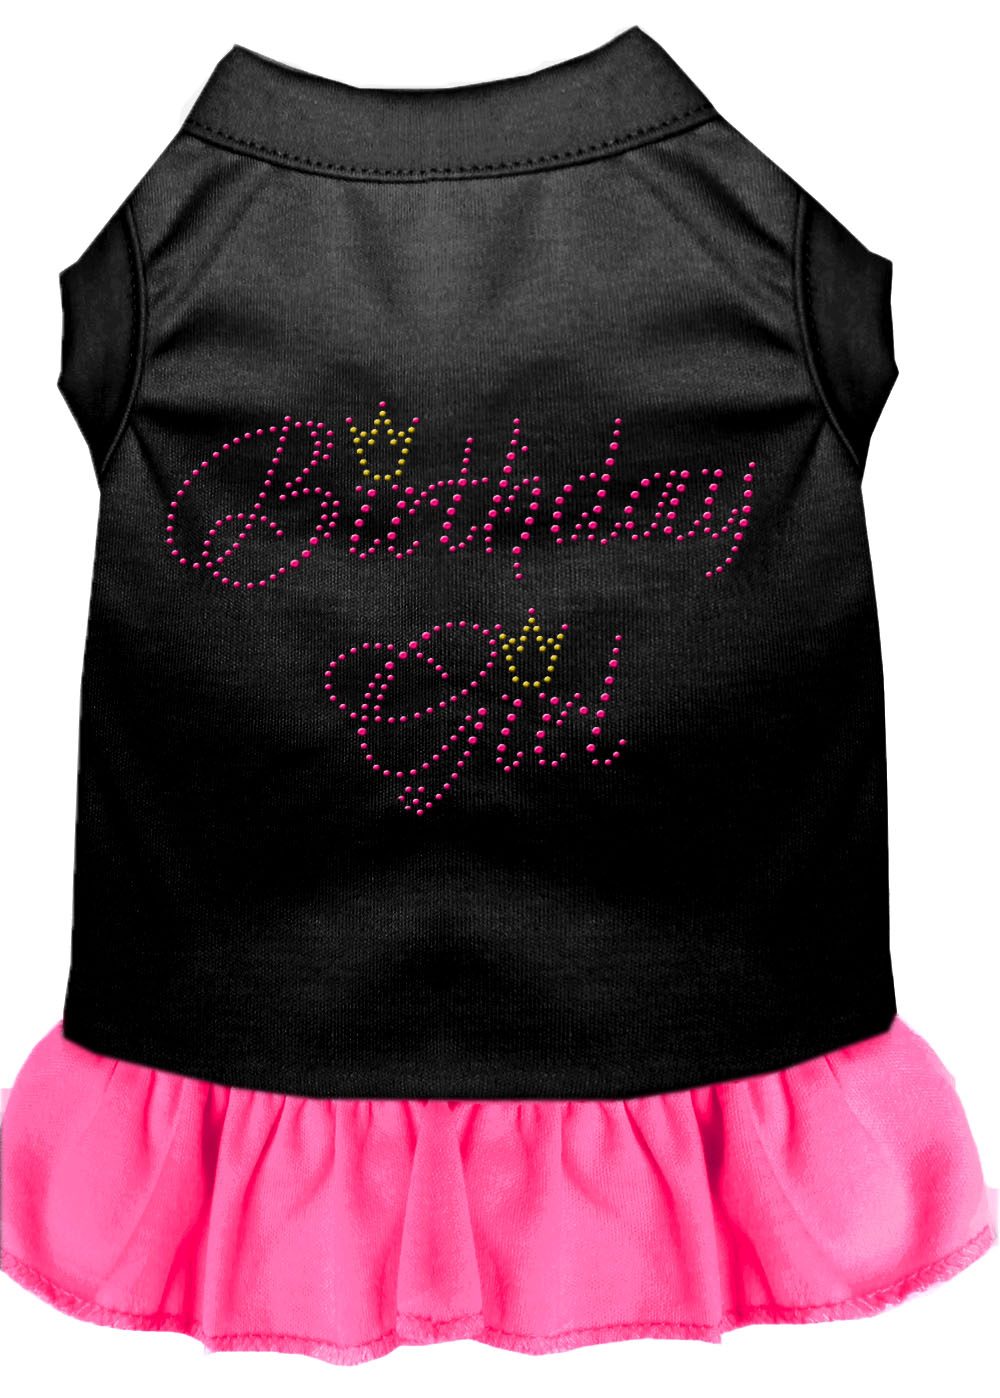 Birthday Girl Rhinestone Dress Black with Bright Pink Med